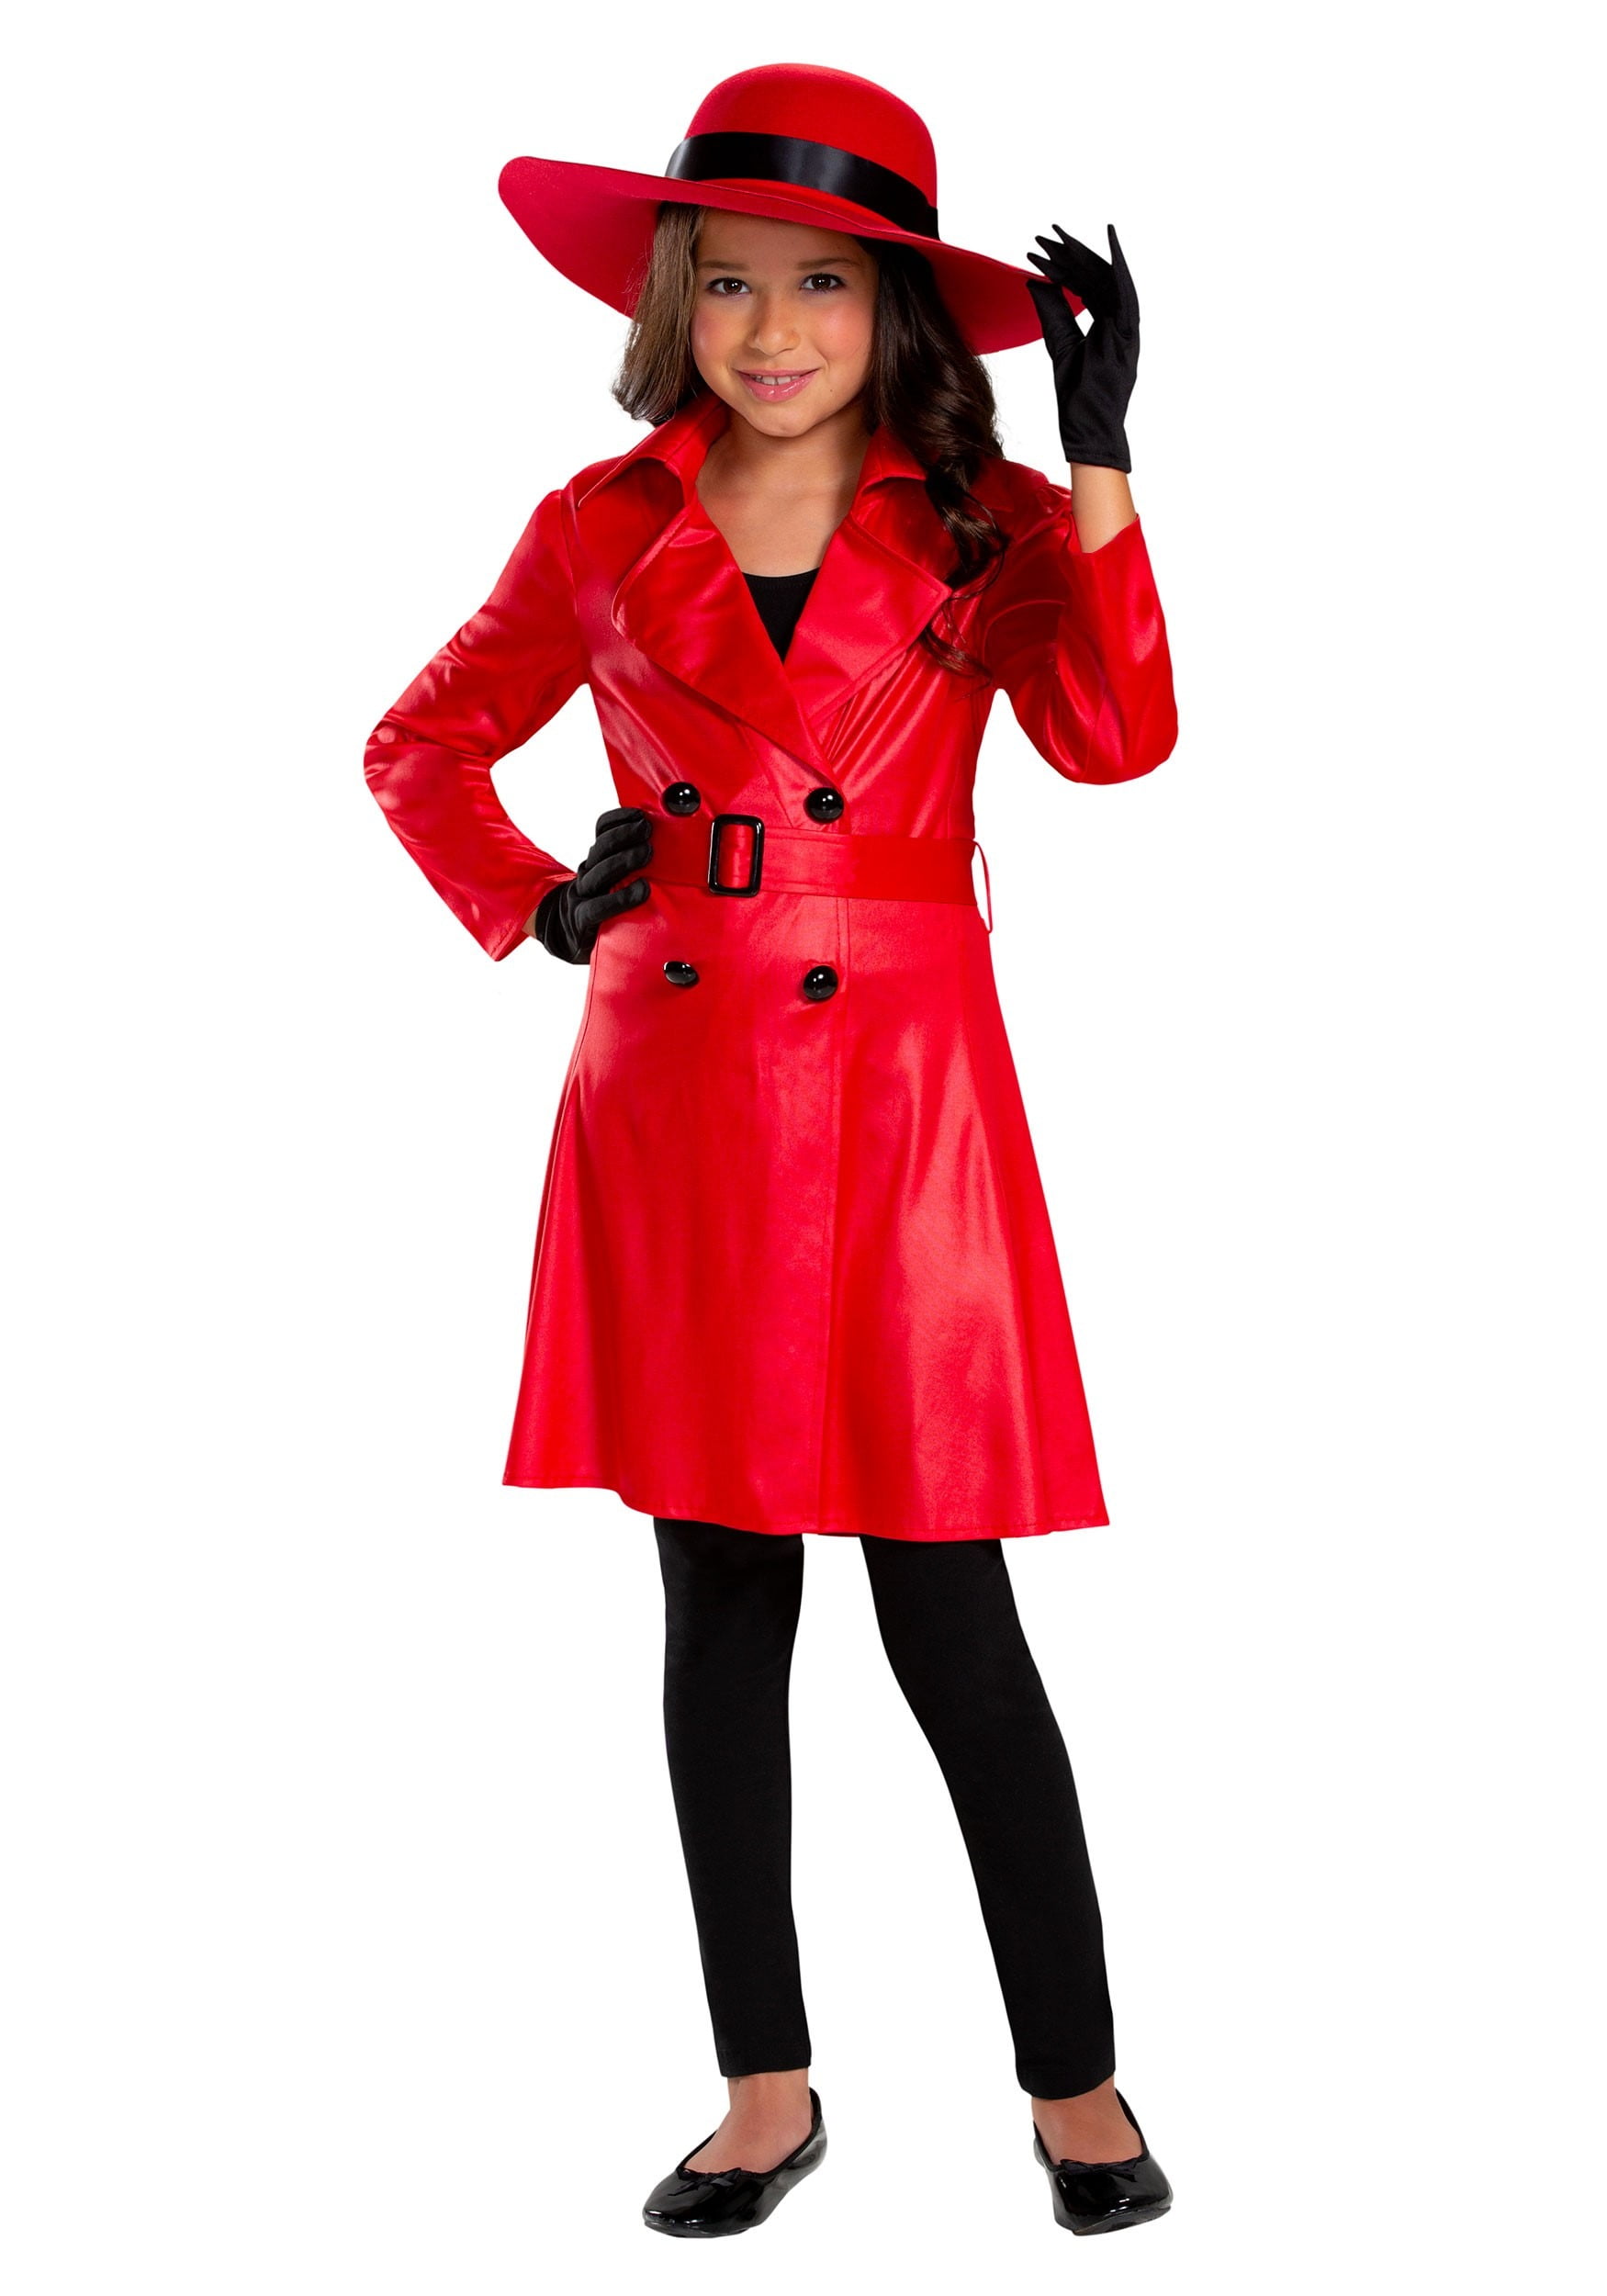 Mystery Agent Costume for Girls - Walmart.com